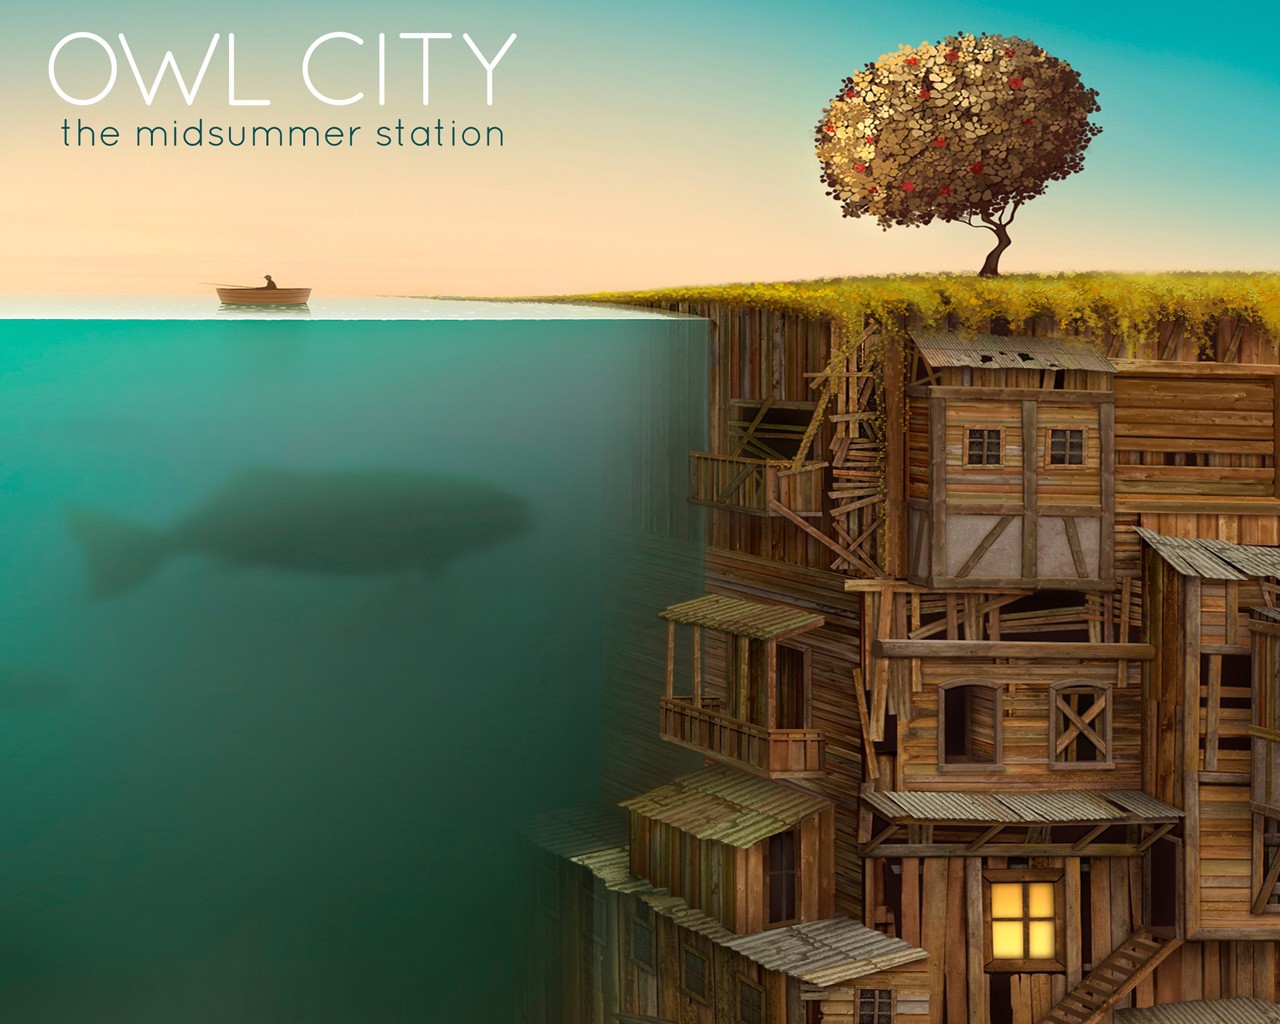 Owl City Wallpaper Desktop